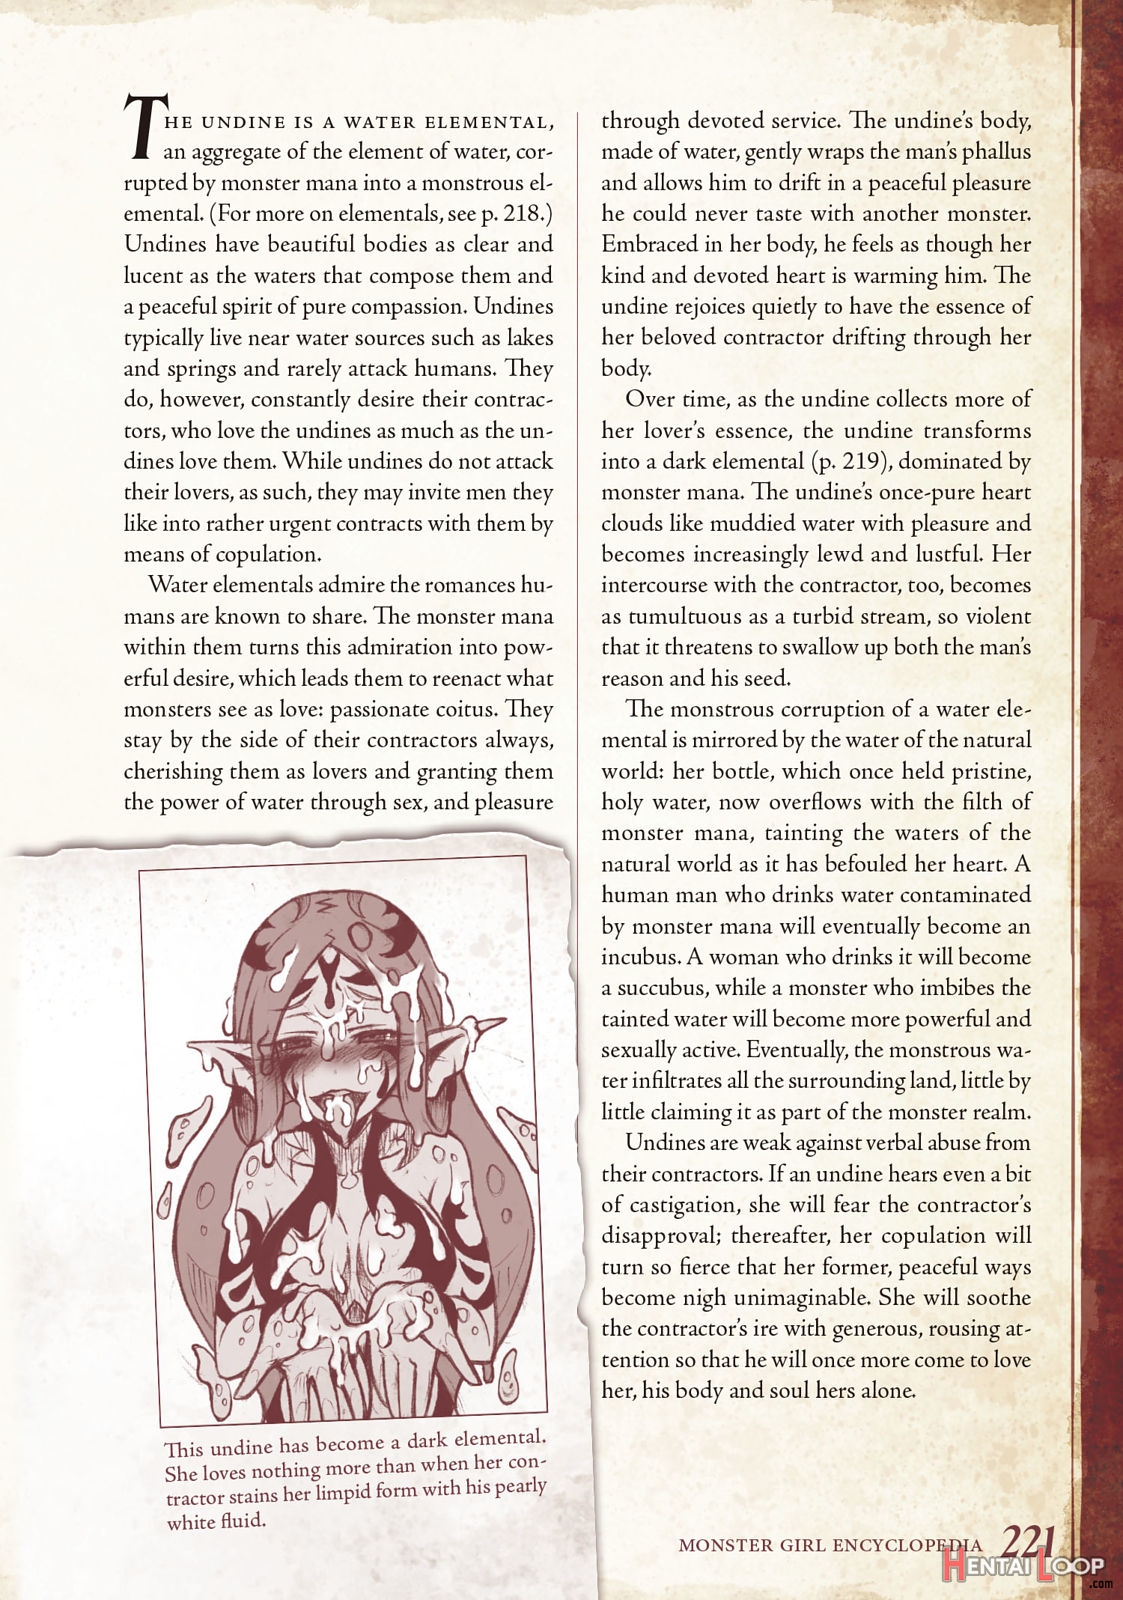 Monster Girl Encyclopedia Vol. 1 page 222